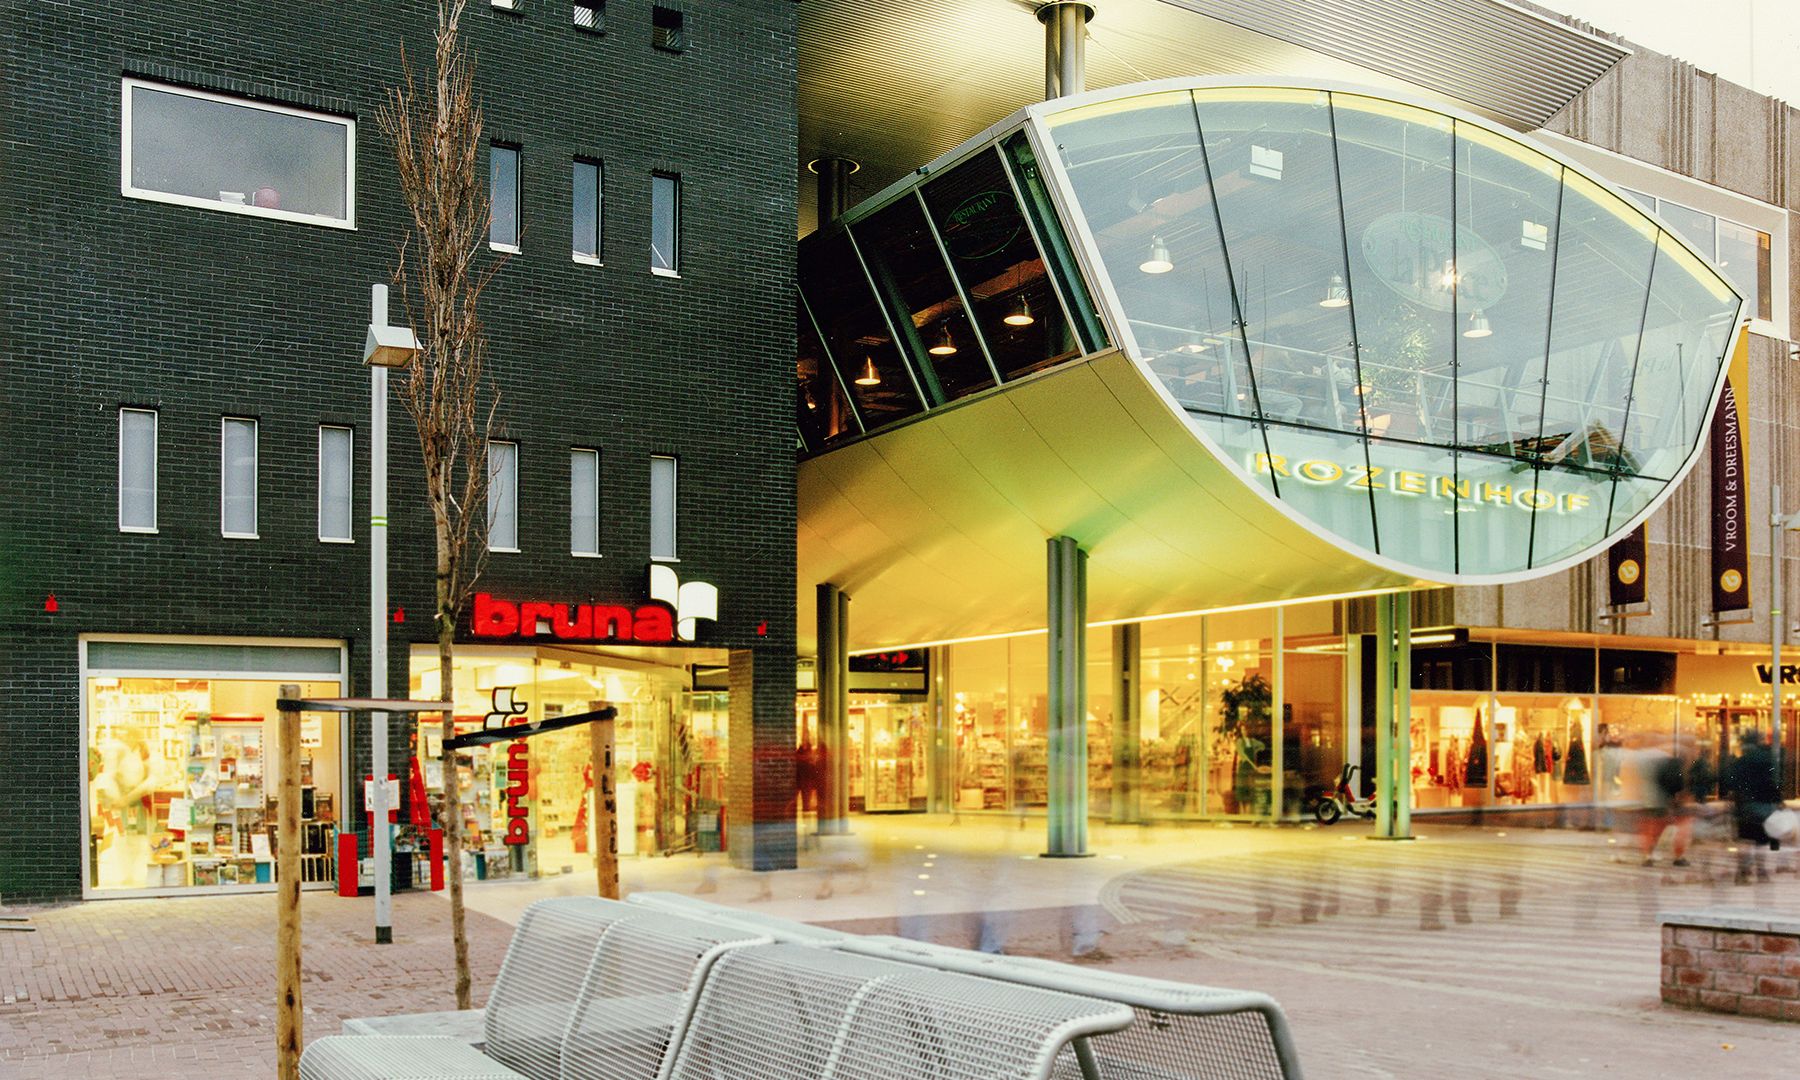 Winkelcentrum Rozenhof - Zaandam, Engelman Architecten